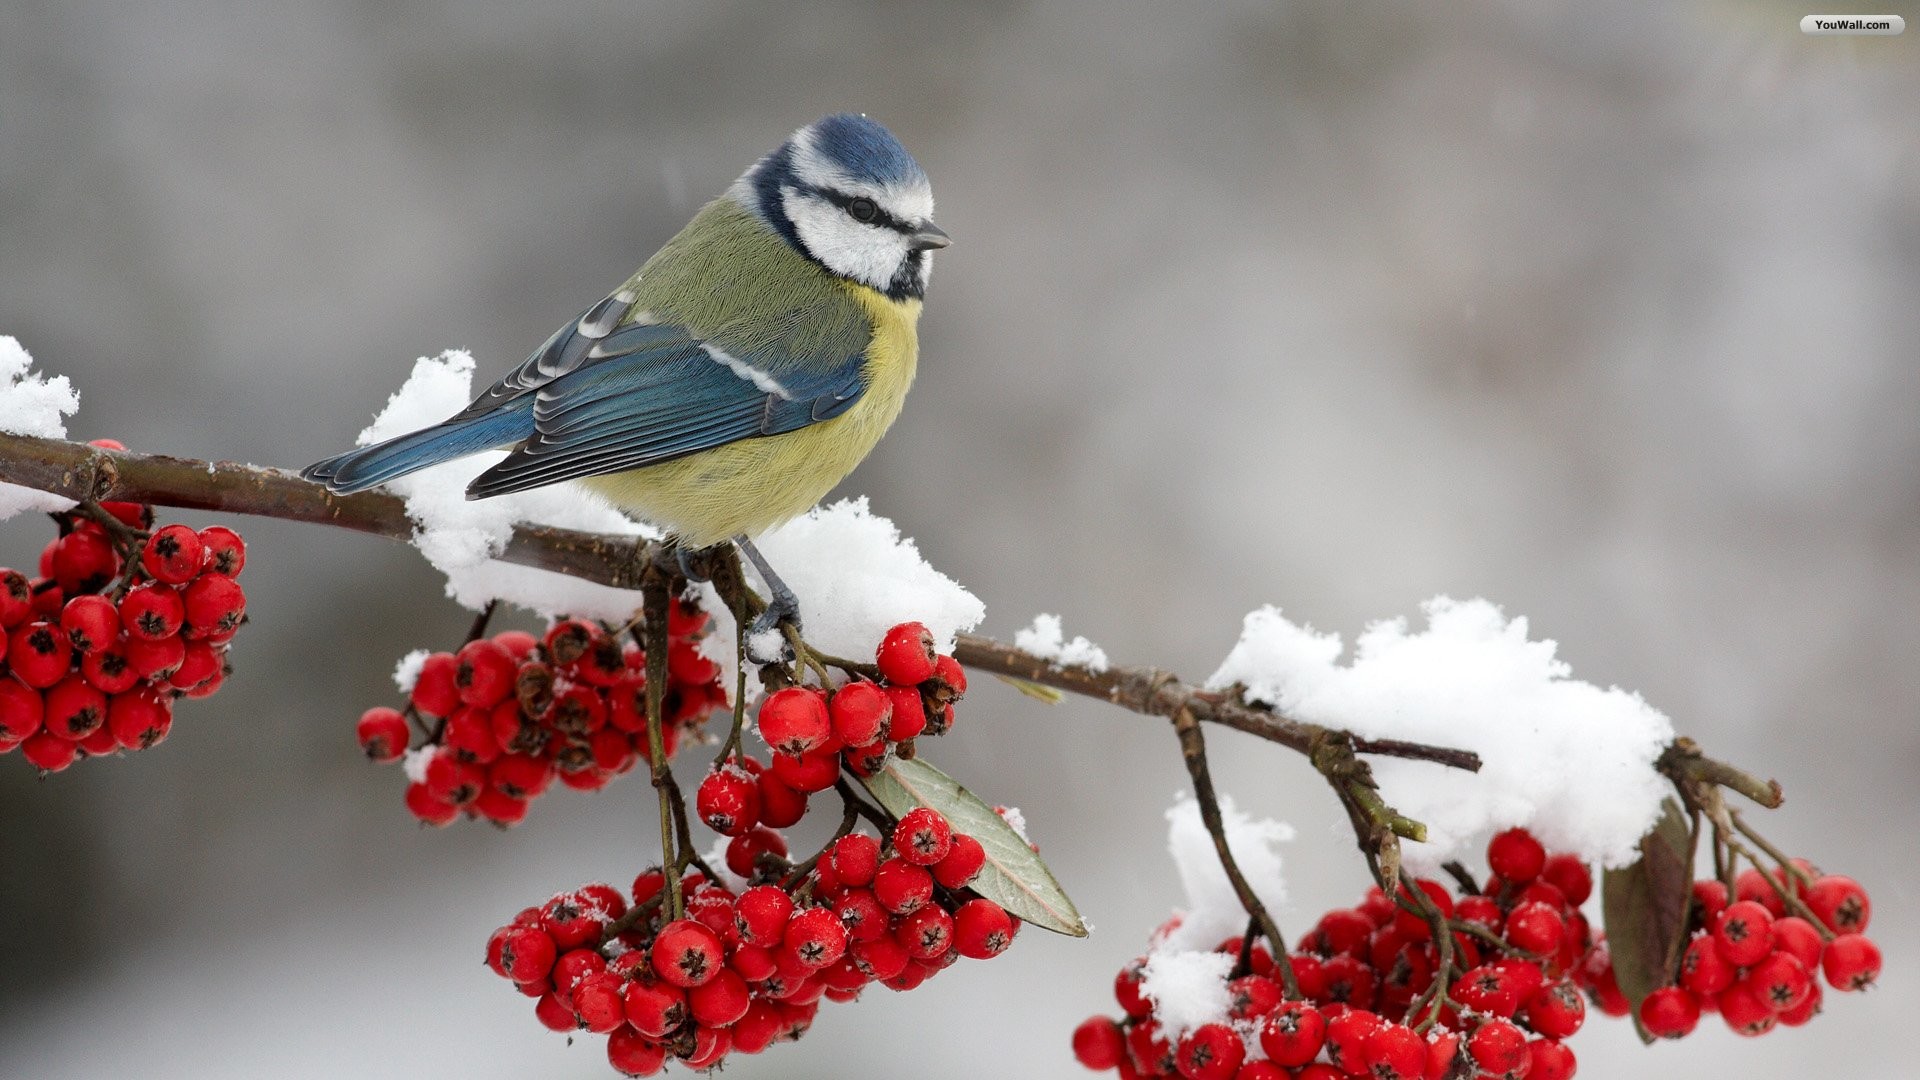 Photos of Winter birds to share on facebook | Ventube.com Birds In Winter  Screensavers